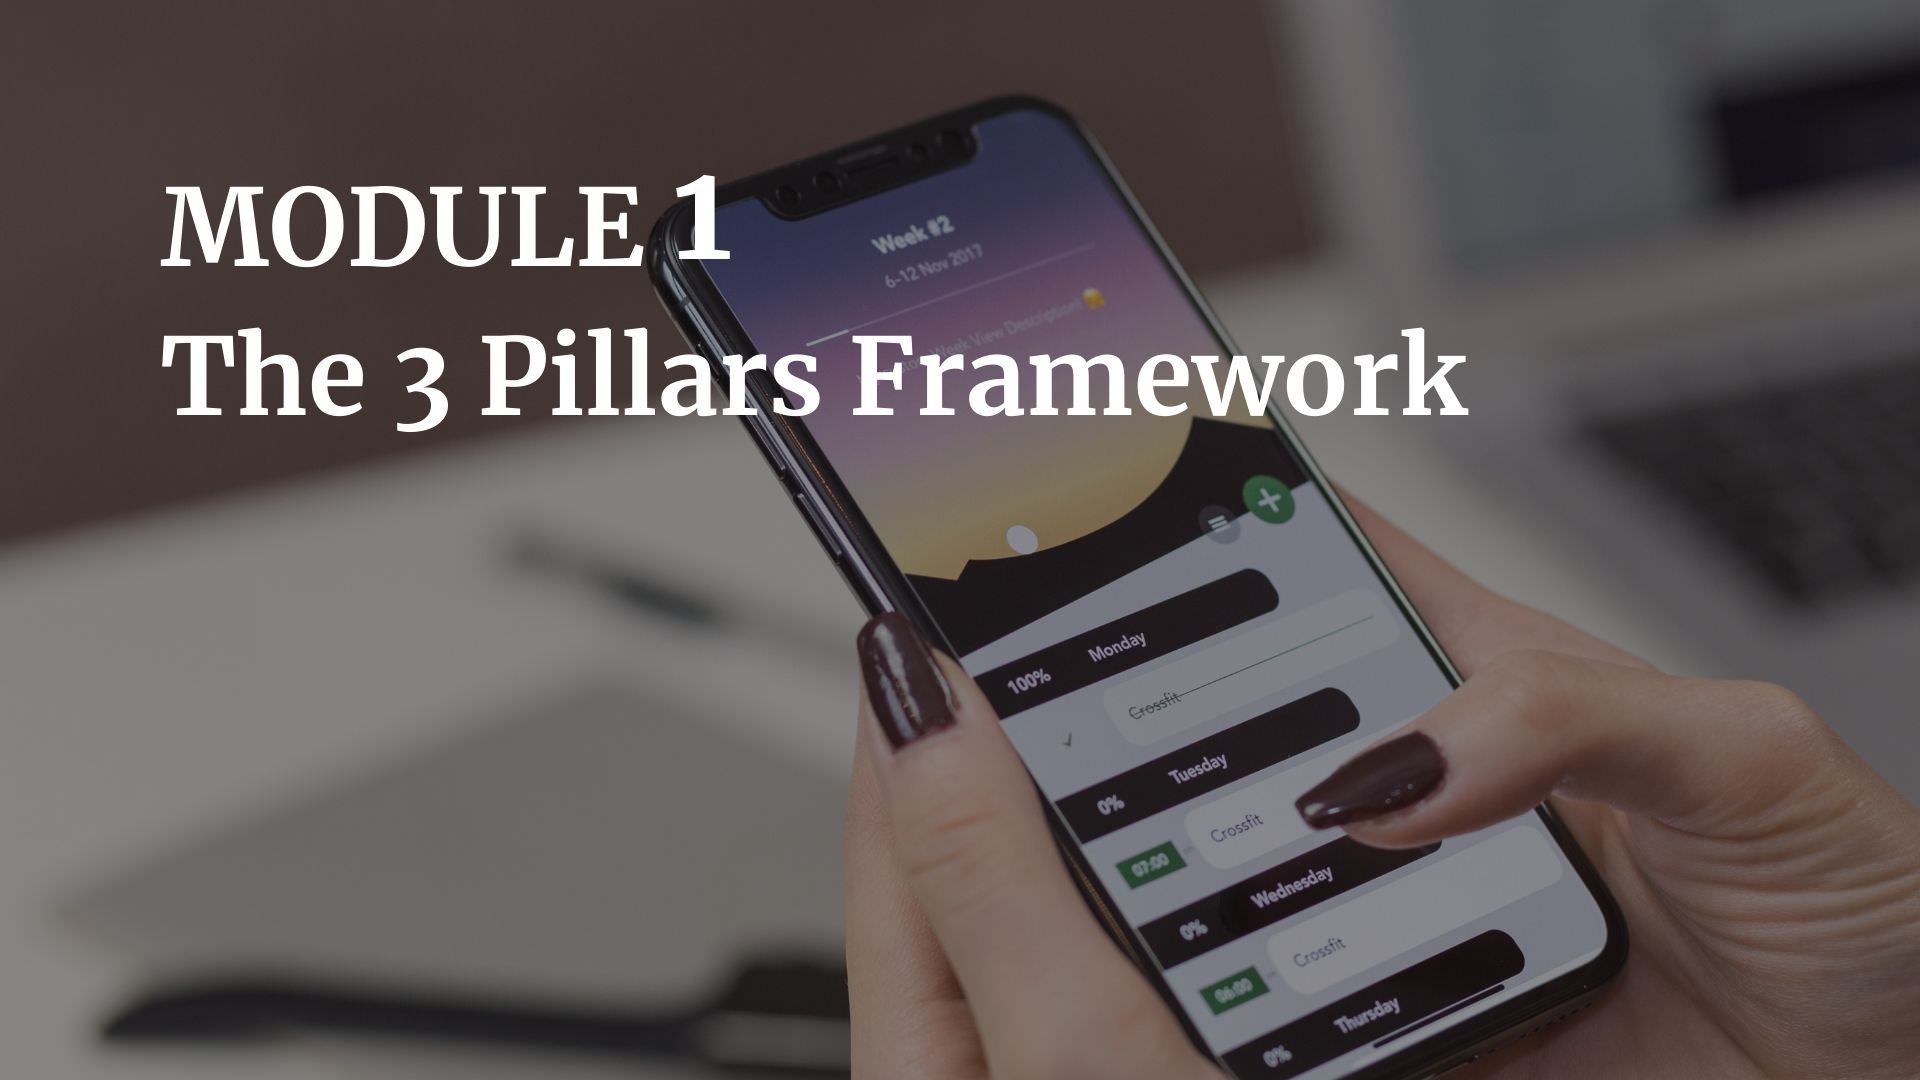 The three pillars framework for building an online business